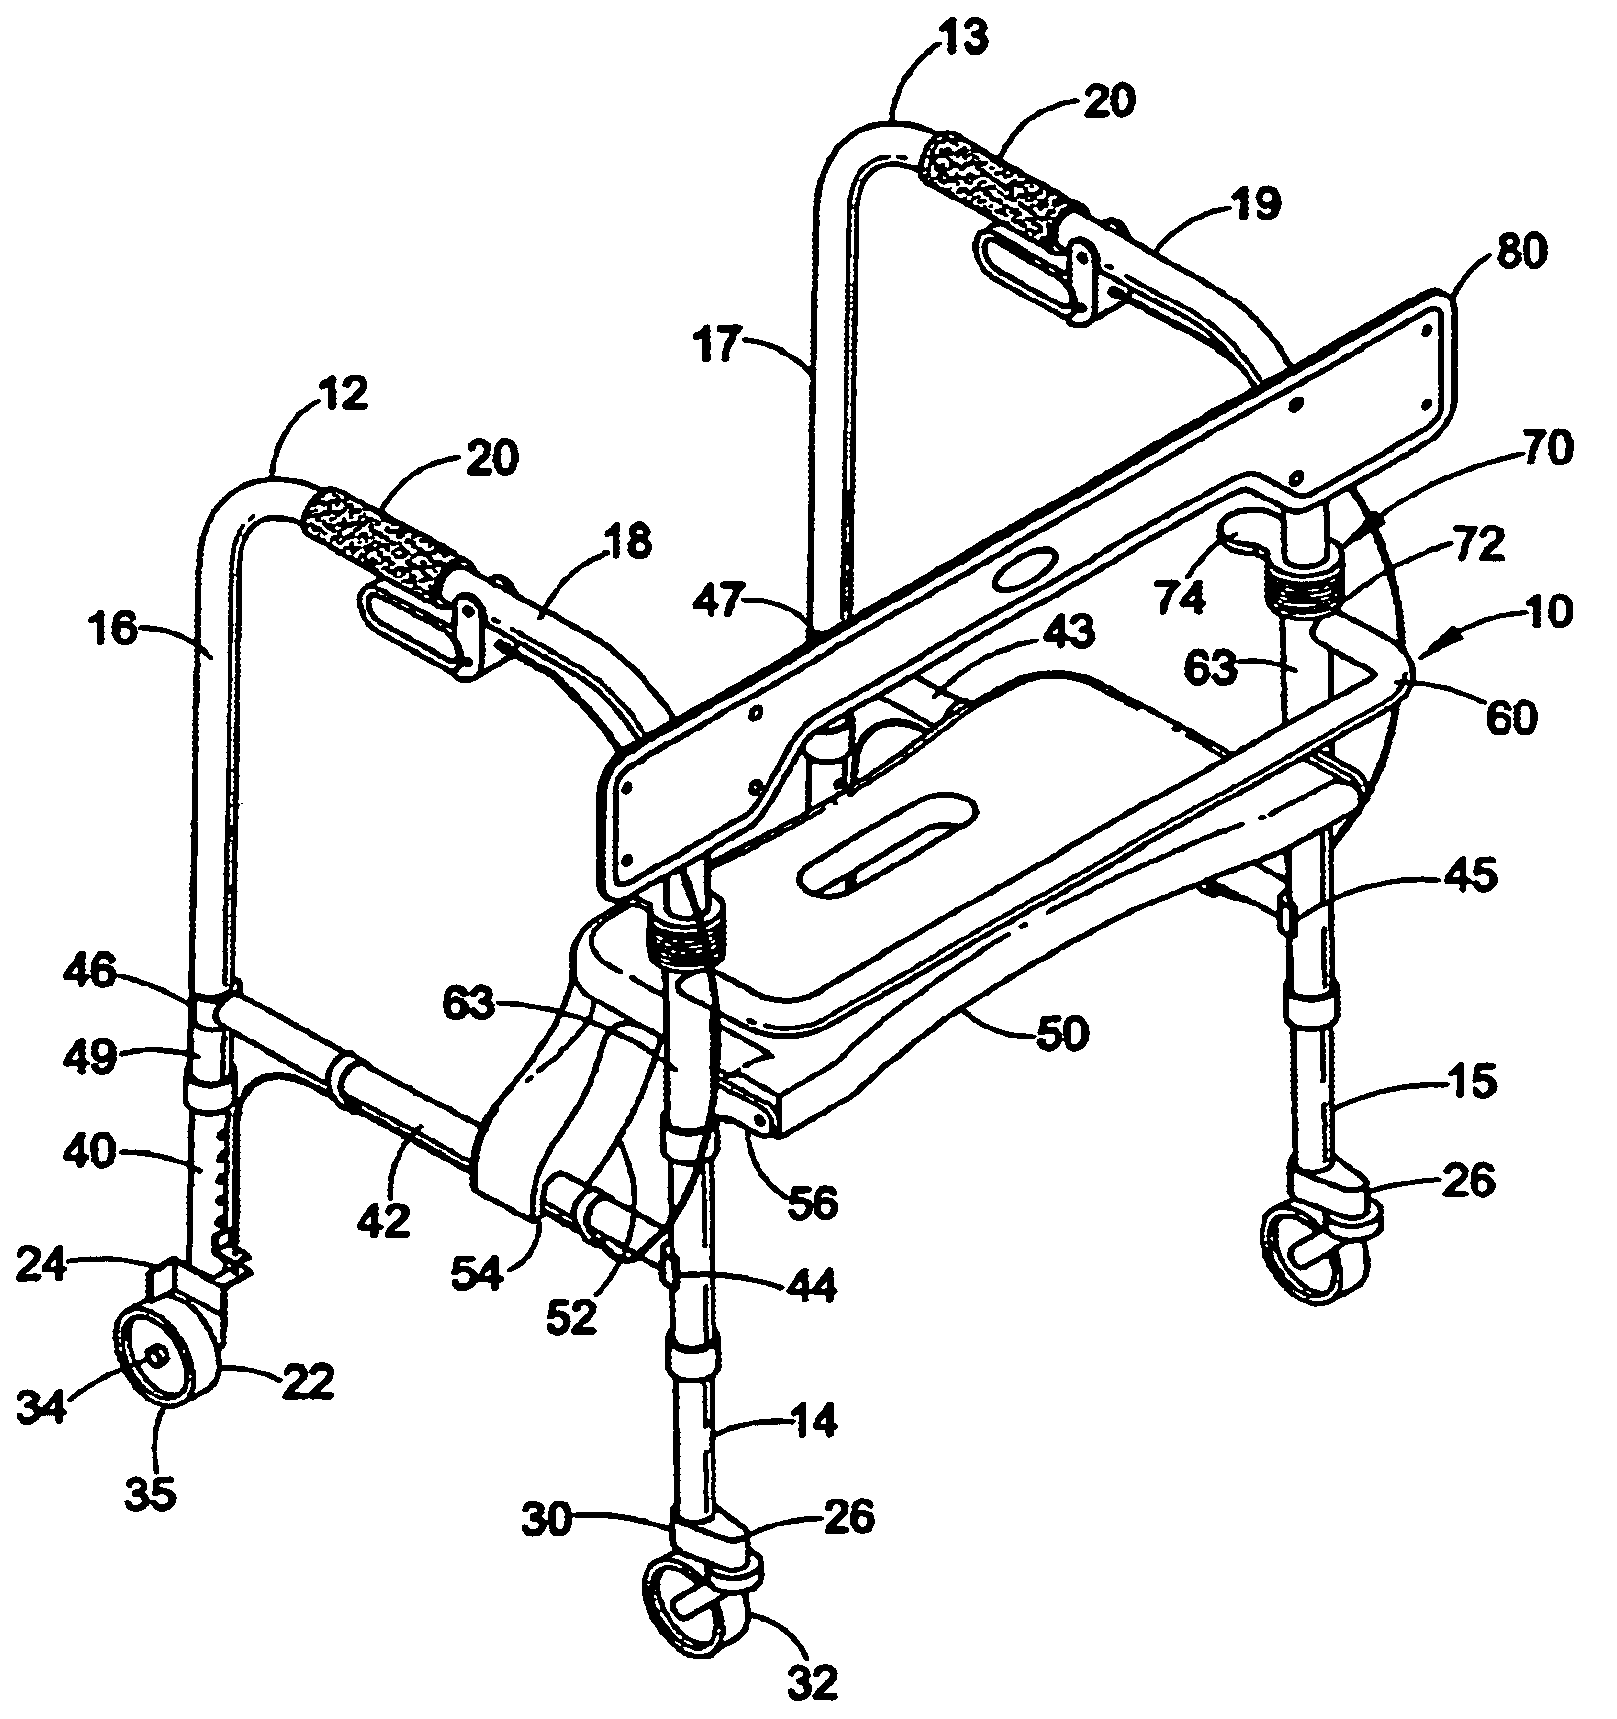 Inwardly folding rollator with an upwardly pivotable seat